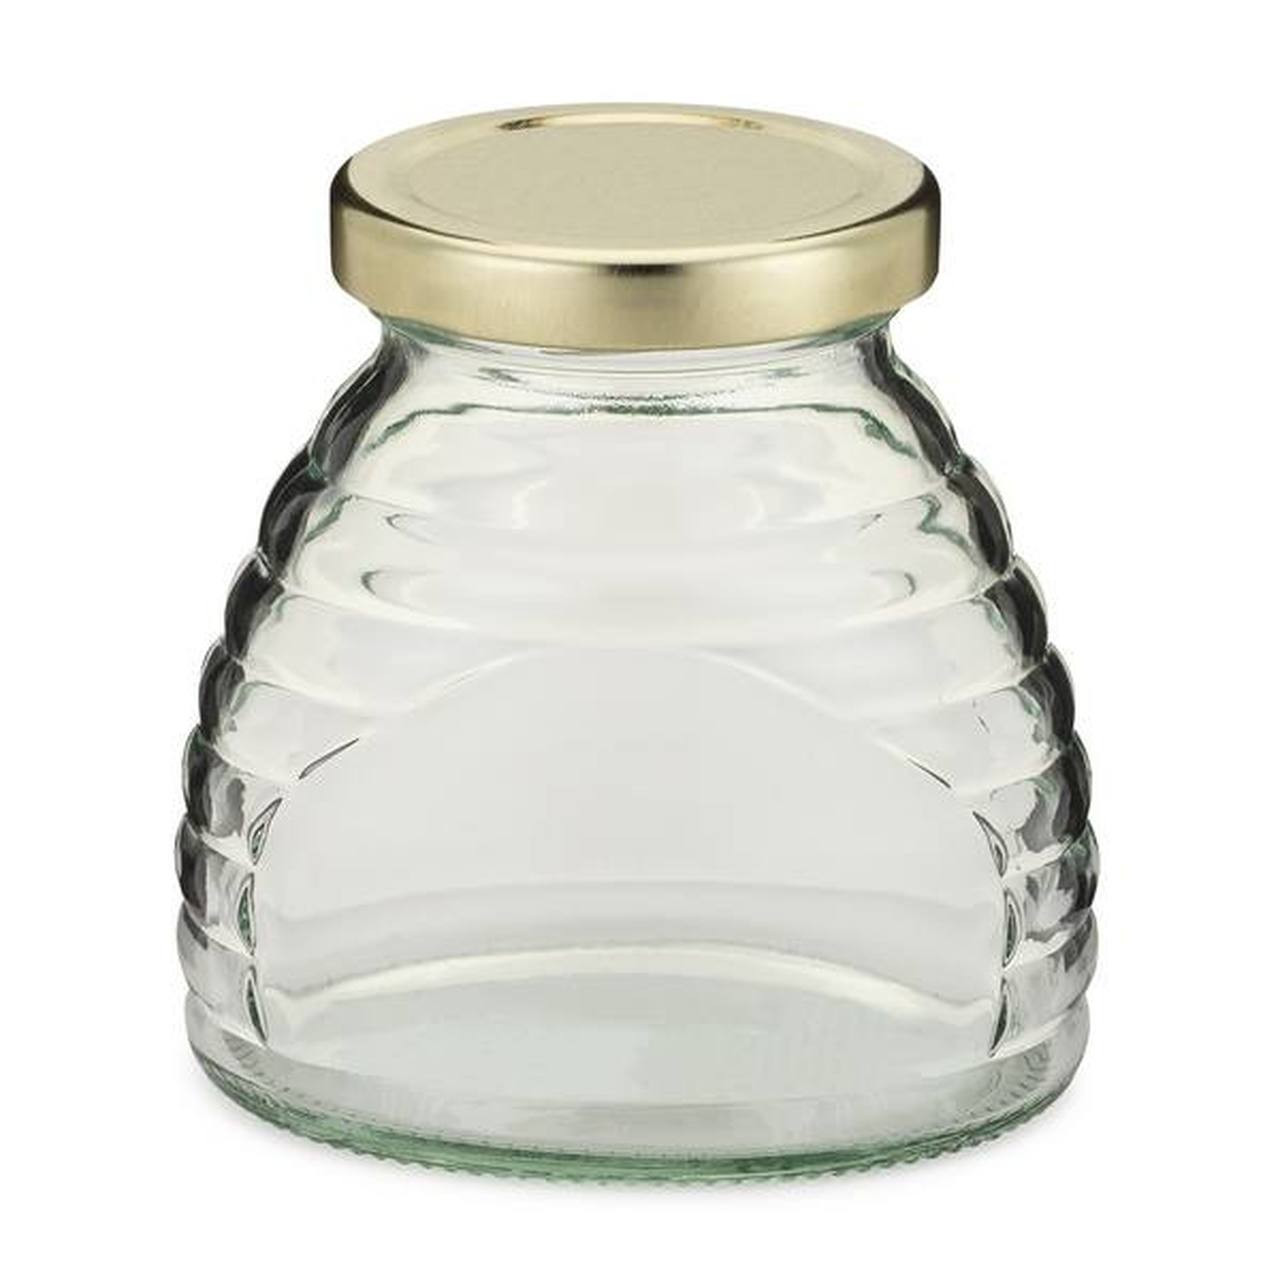 12oz Glass Skep Honey Jars - 12 Count Case - Includes Lids